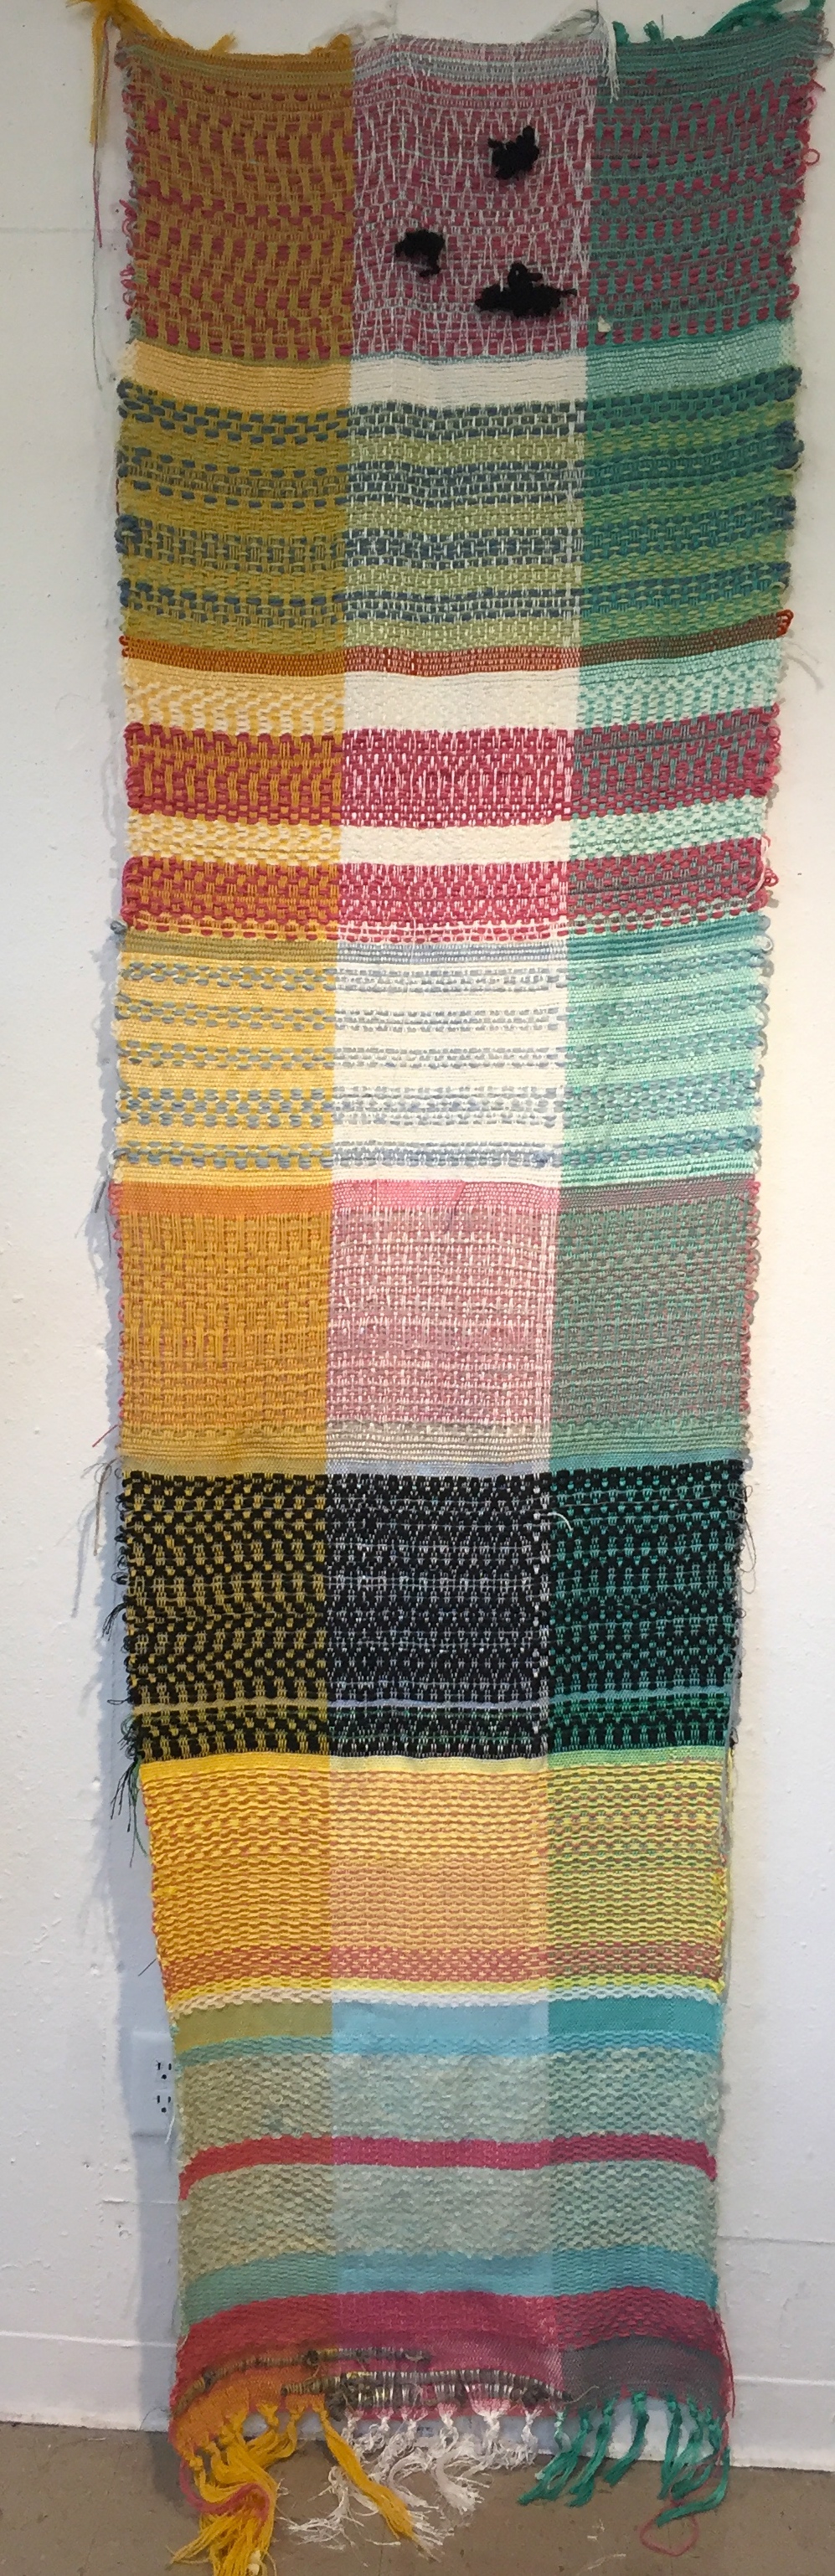 wool rayon fiber colorful bedding pillows blanket bag cotton